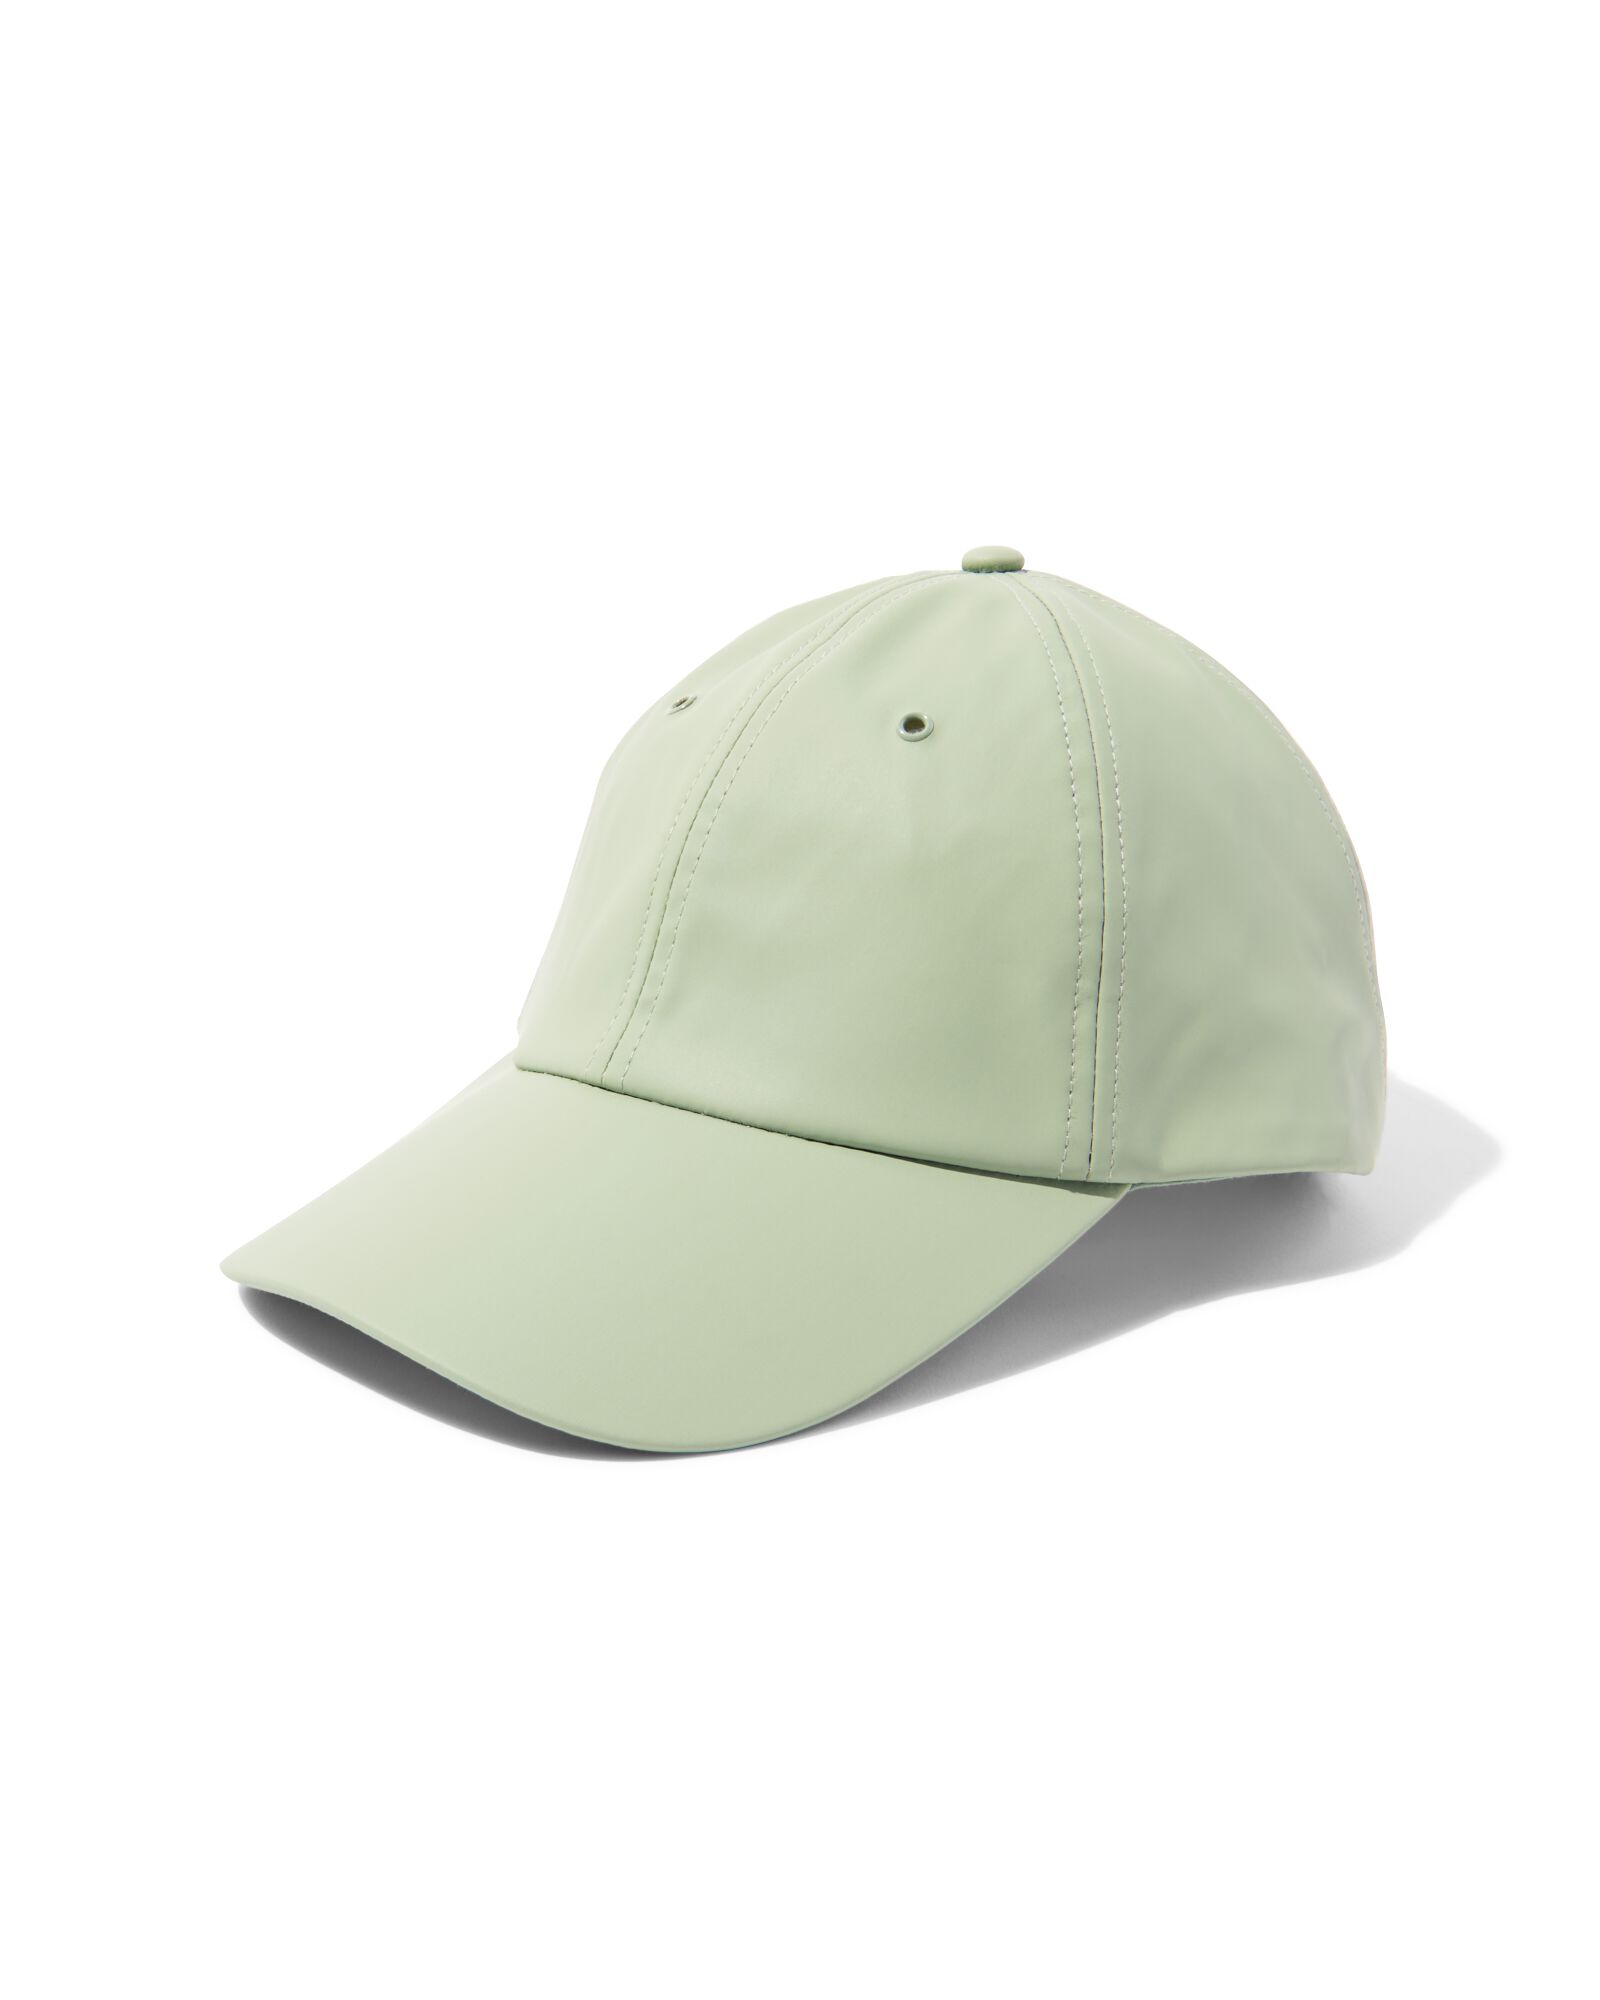 casquette de pluie vert clair - HEMA